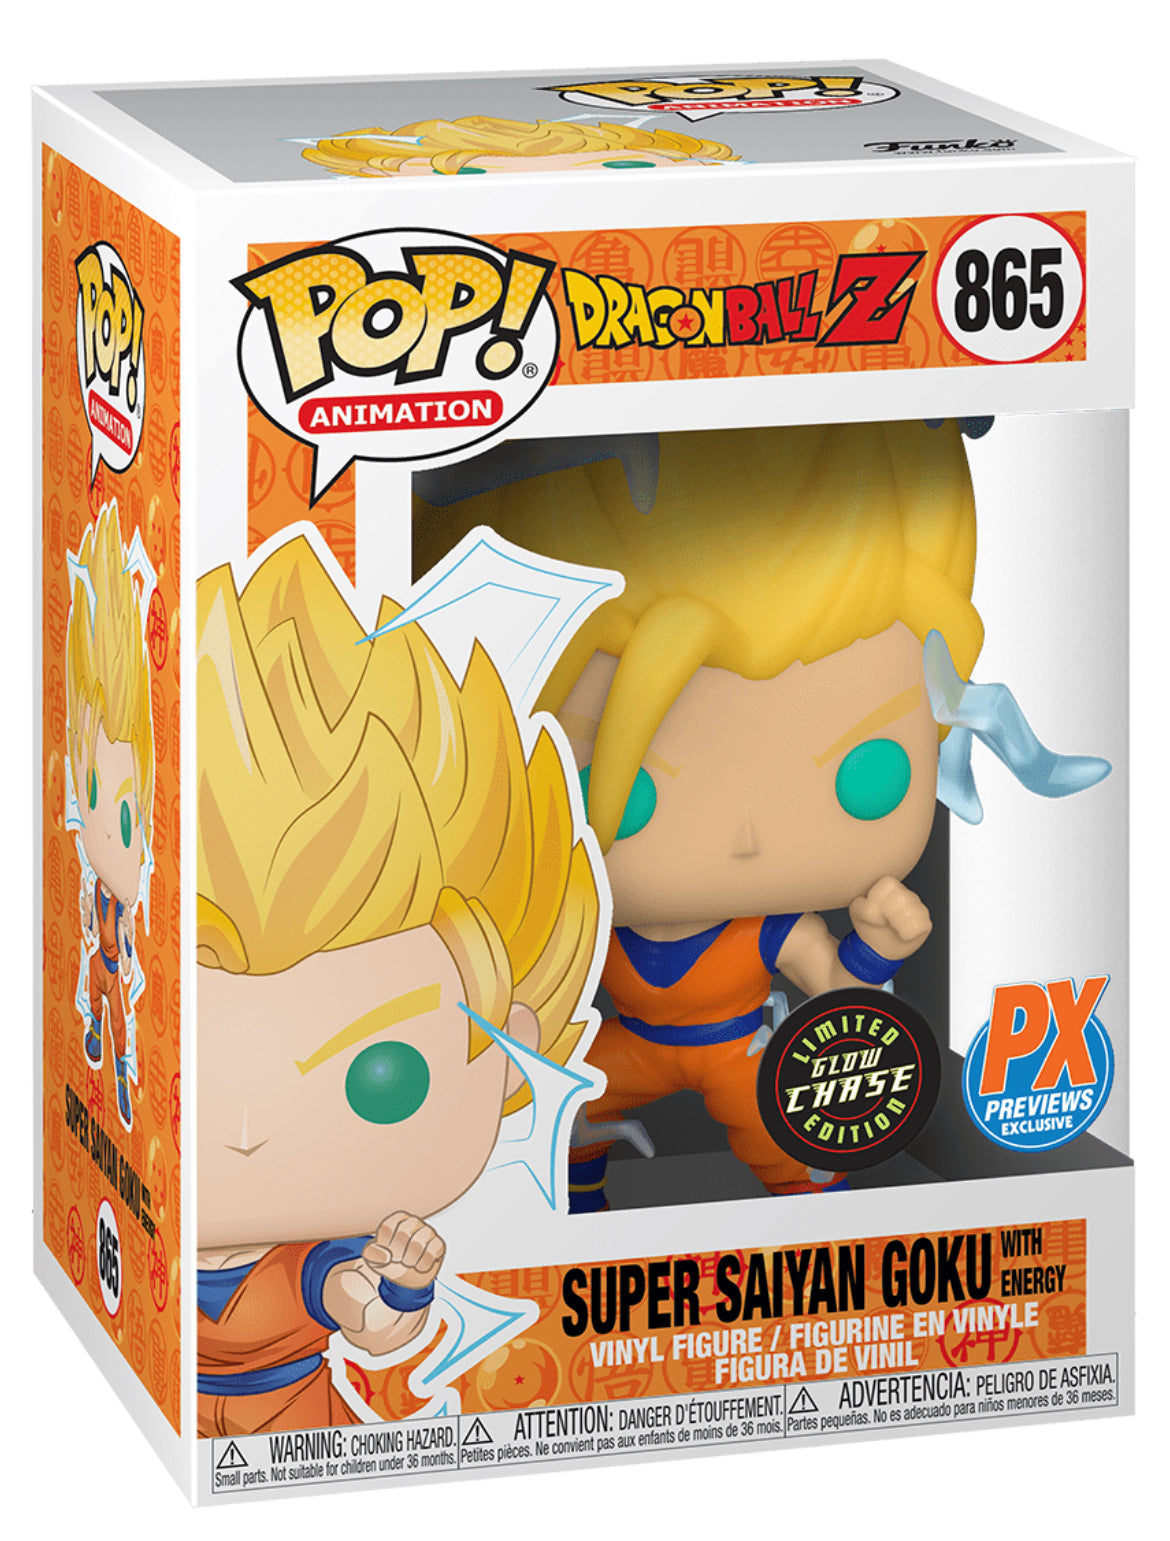 Funko Pop! Animation Dragon Ball Z Super Saiyan Goku with Energy (Glow)  (Chase) PX Previews Exclusive Figure #865 - US